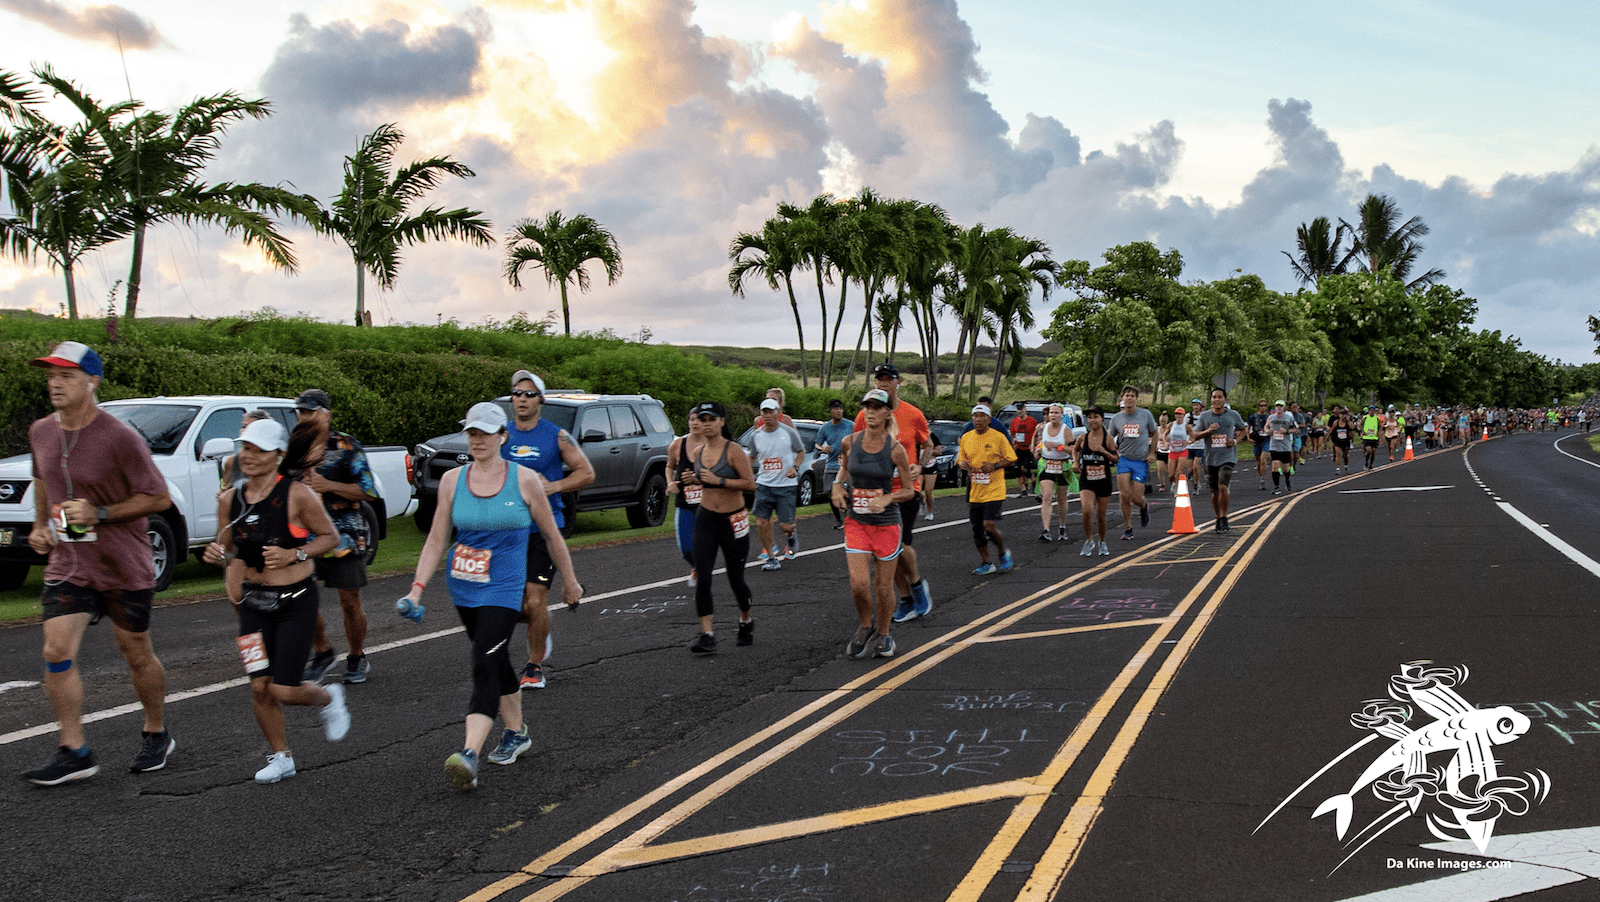 The Kauai Marathon_Hawaii Holidays_September_credit Jo Evans:Da Kine Images LLC_800x450